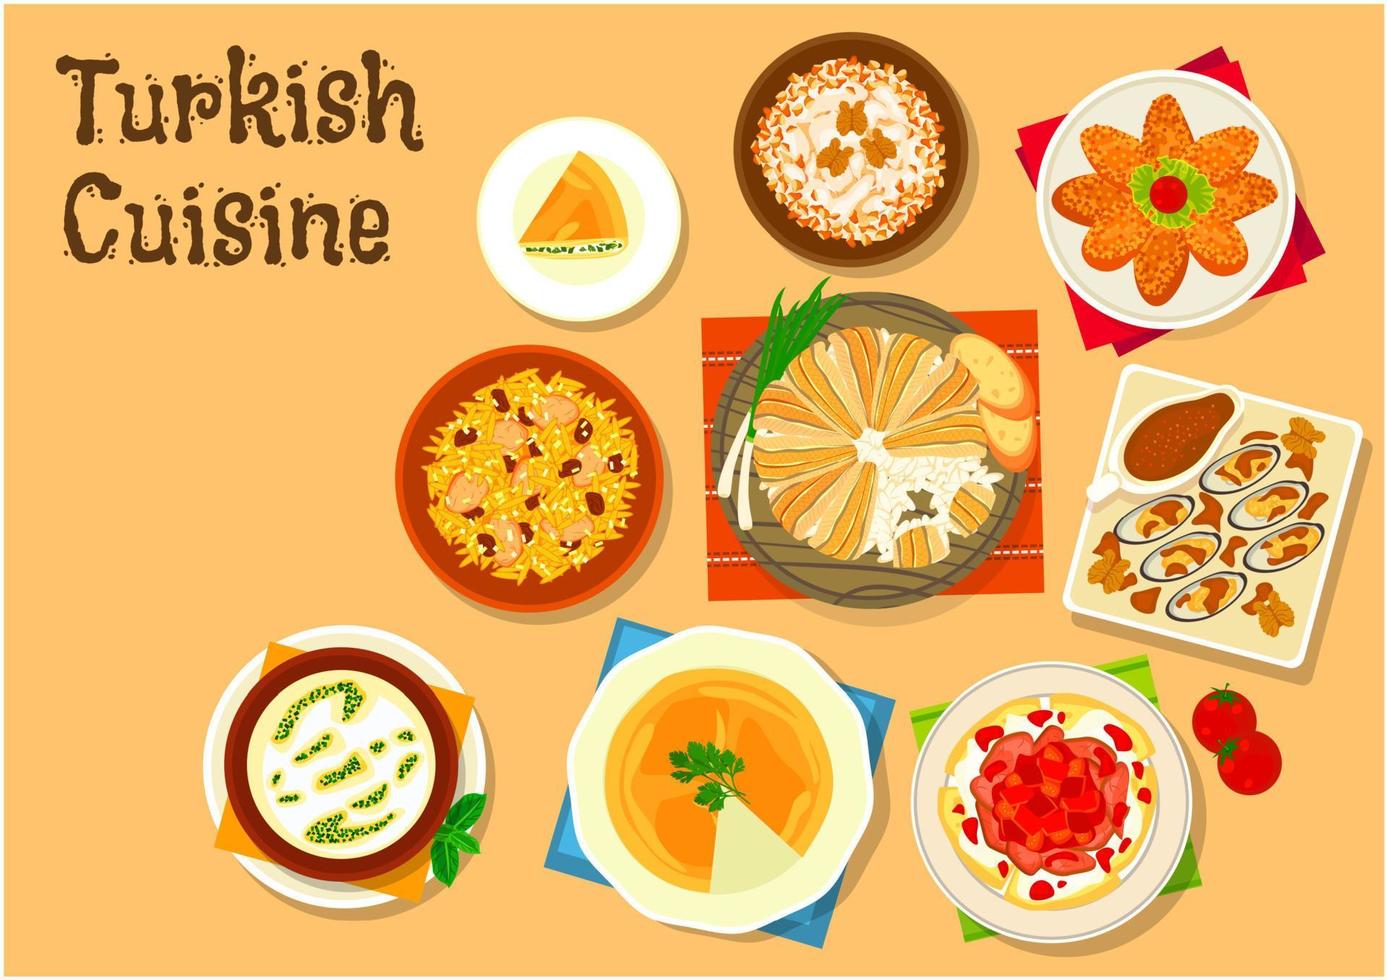 Turkish cuisine national dishes for menu design vector